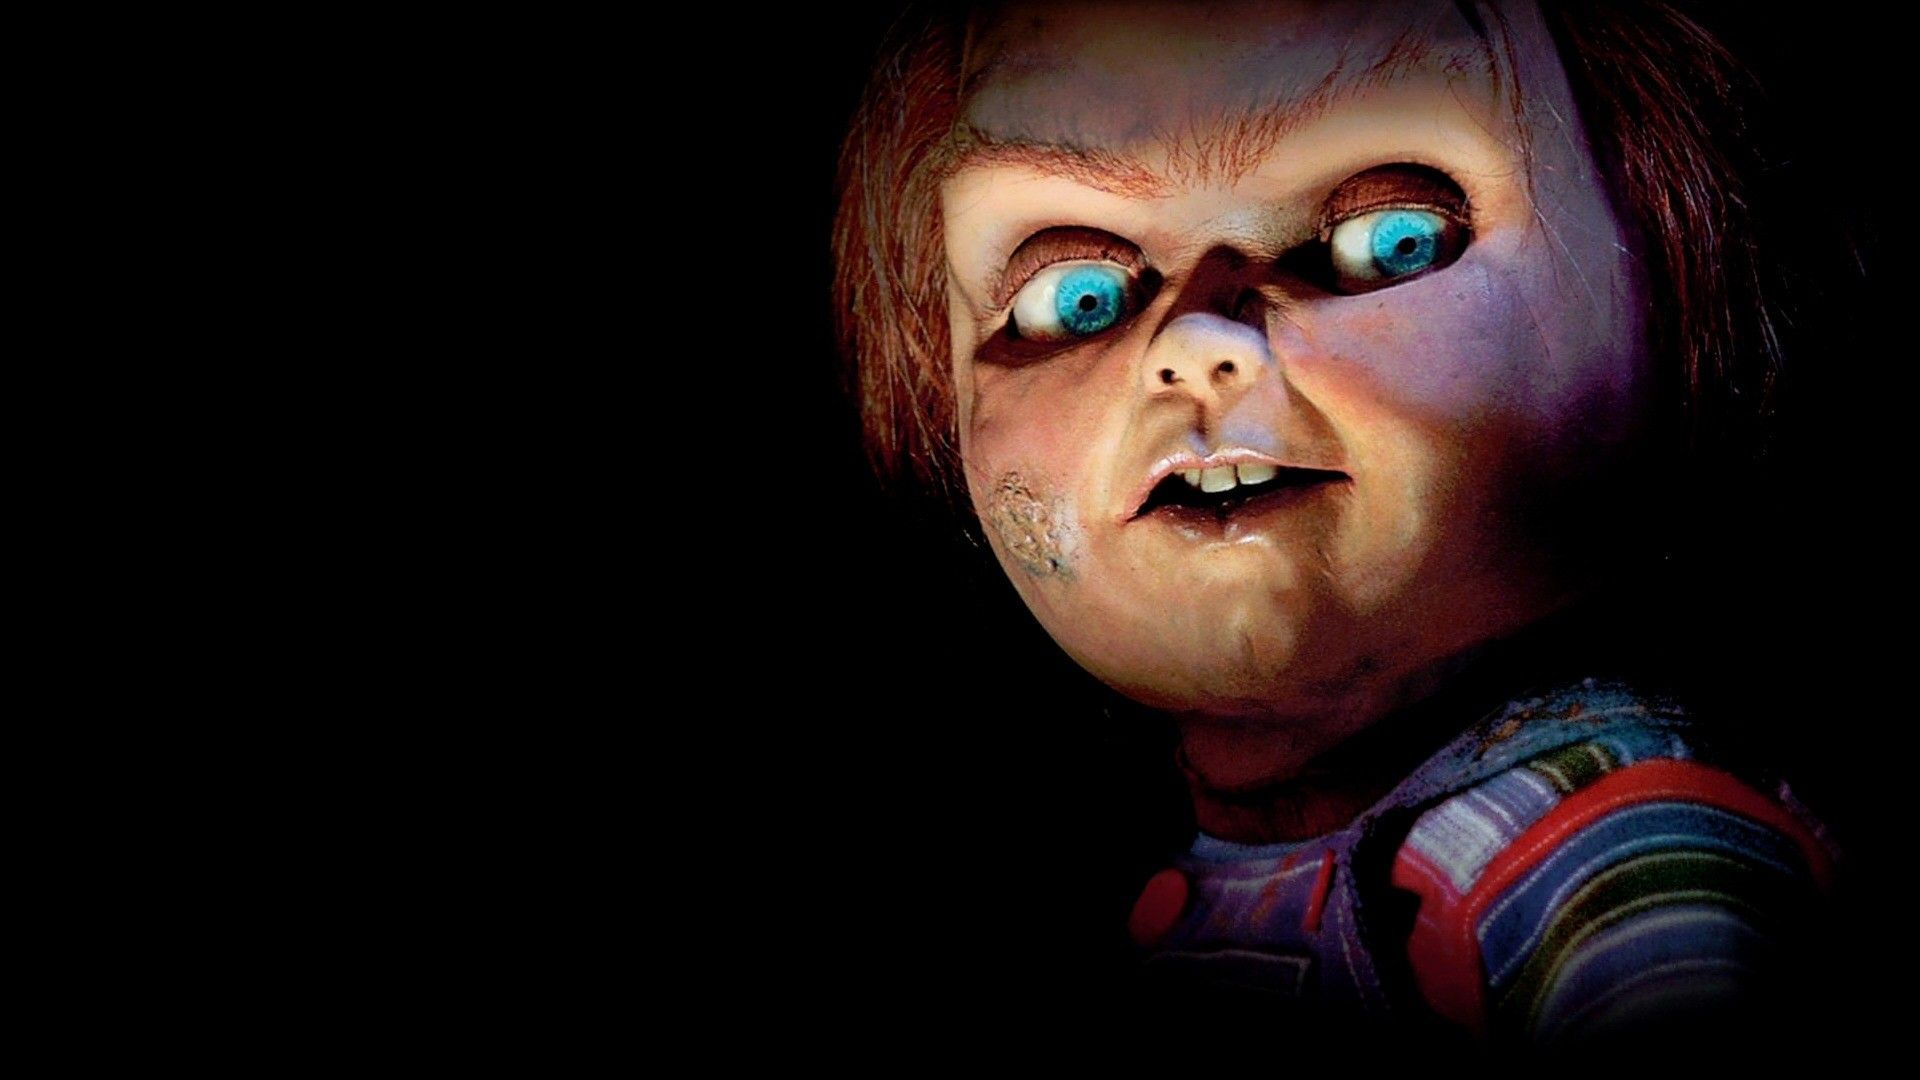 Chucky Doll Wallpaper